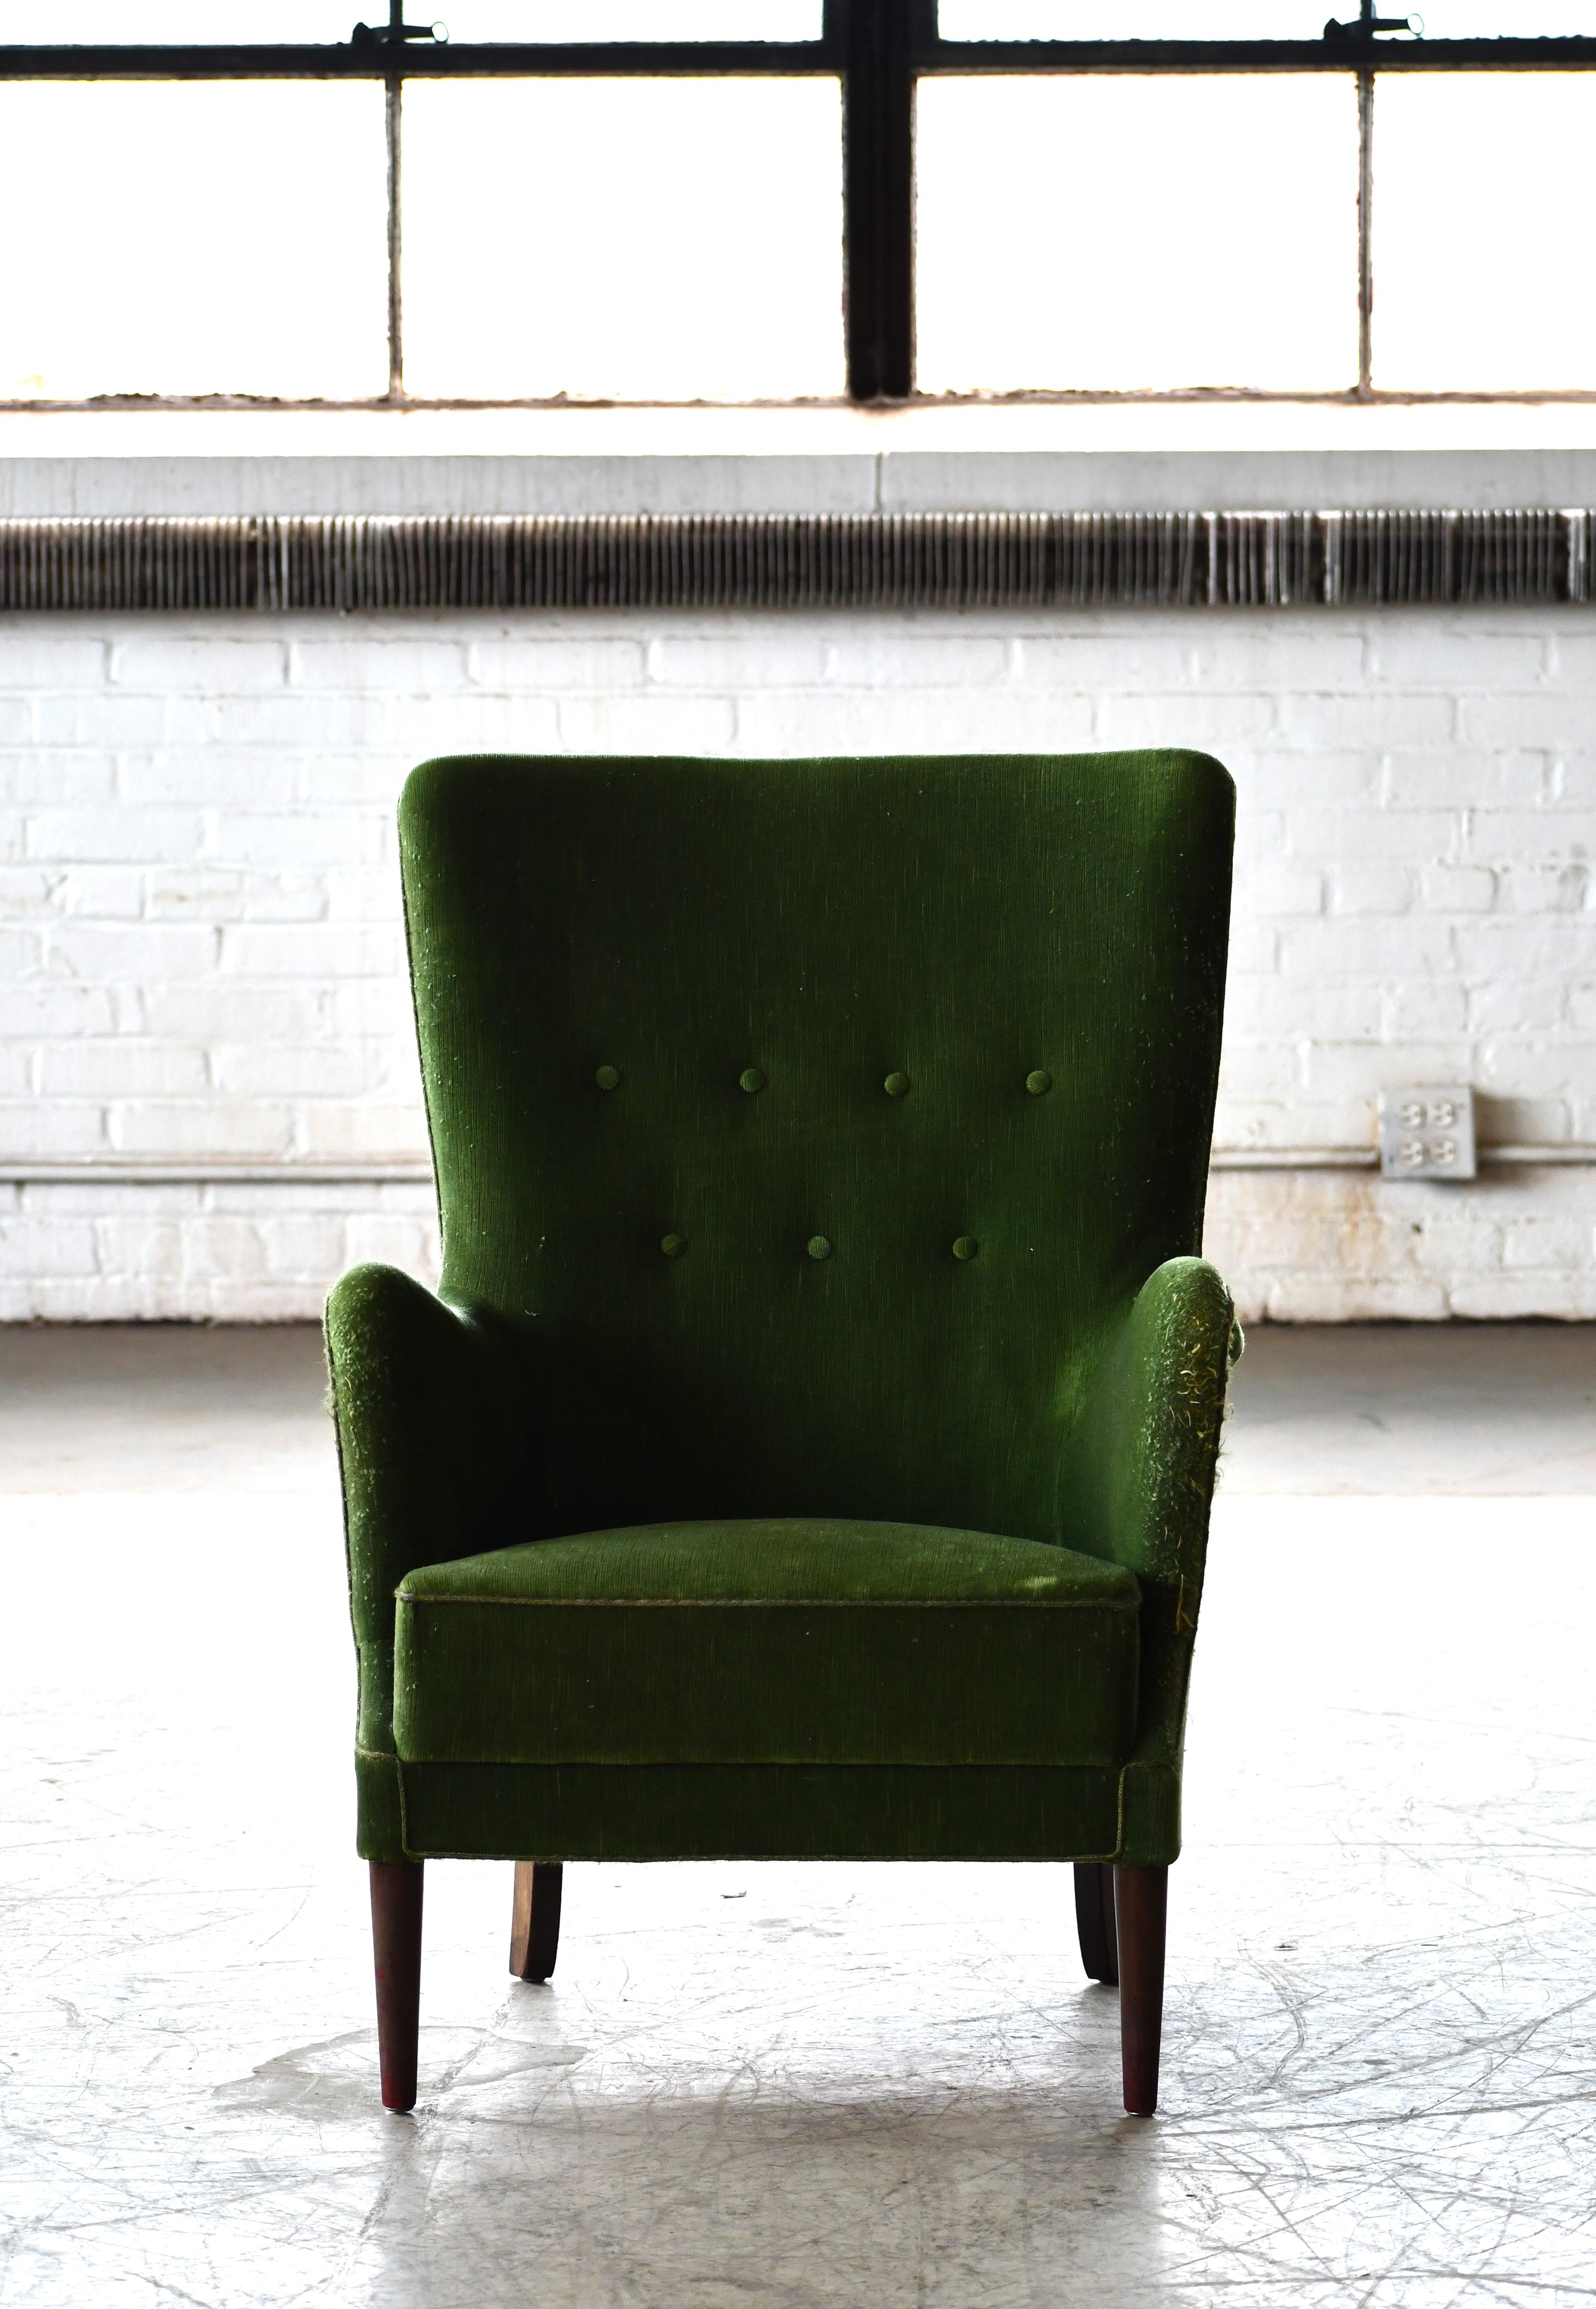 Scandinavian Modern Peter Hvidt Orla Molgaard Classic Danish 1950s Lounge Chair For Sale